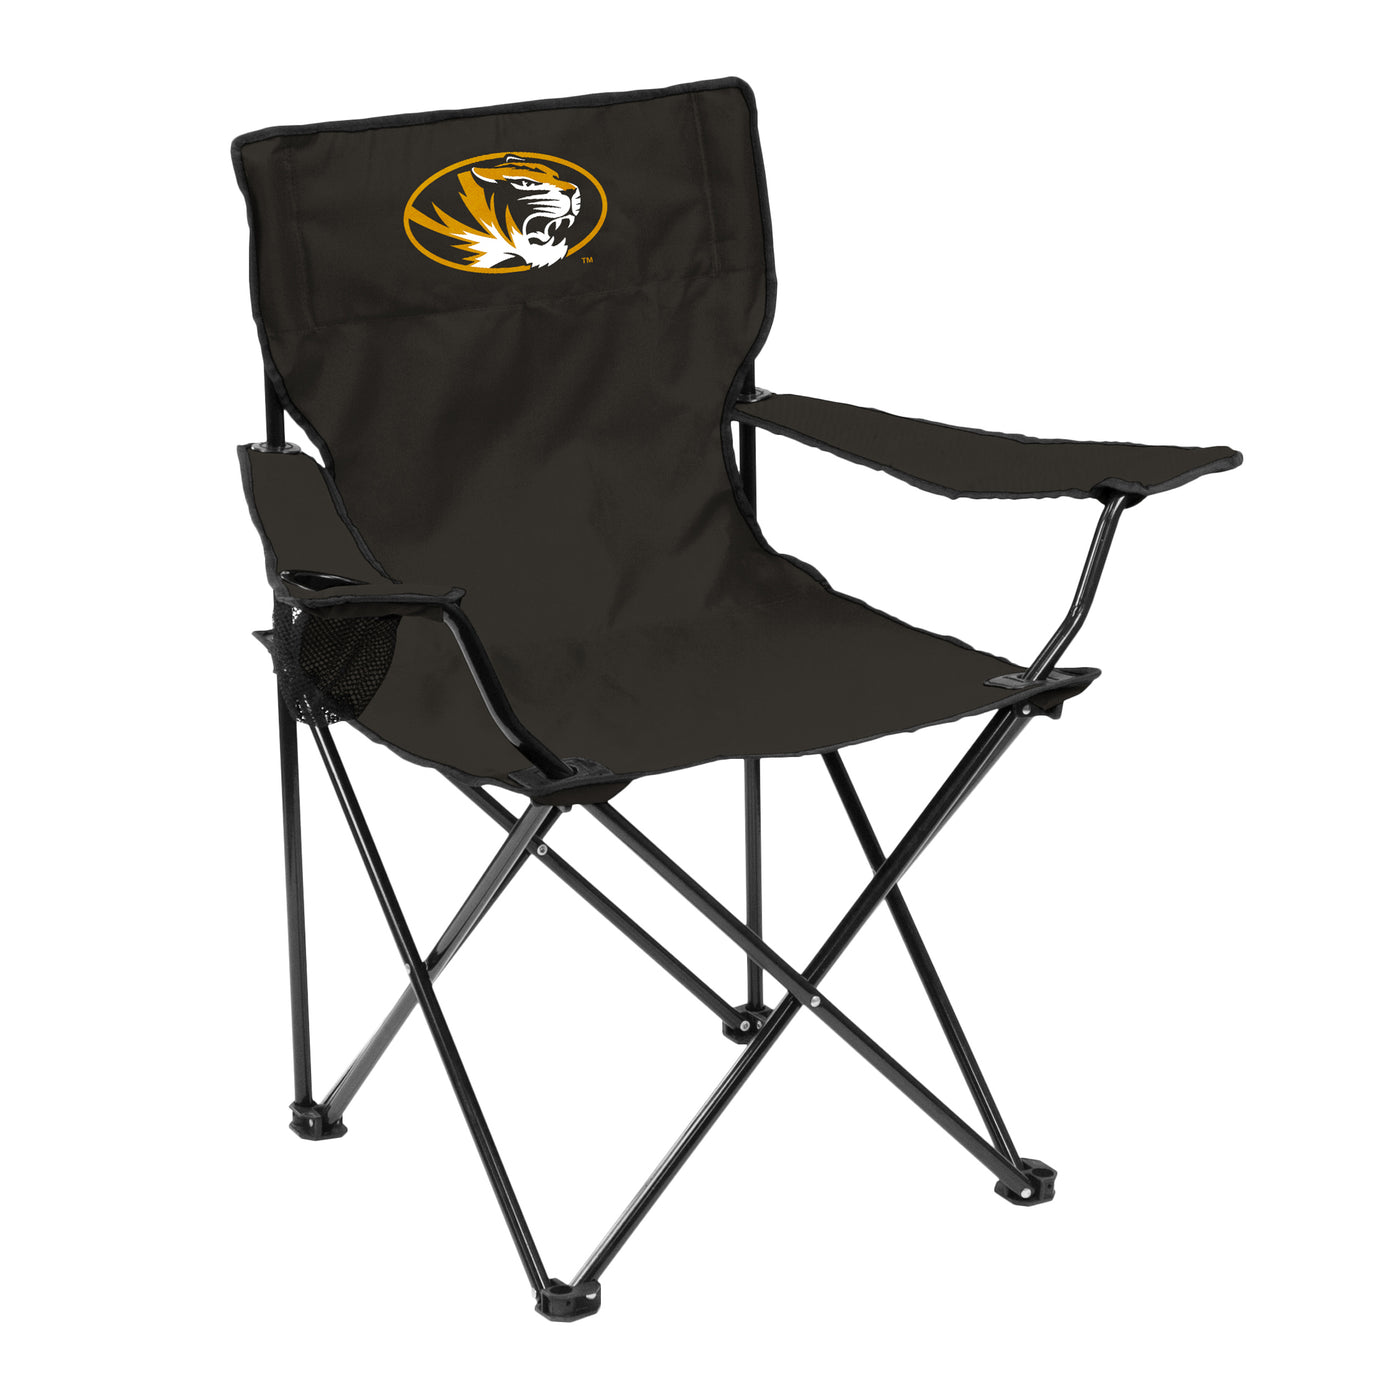 Missouri Quad Chair